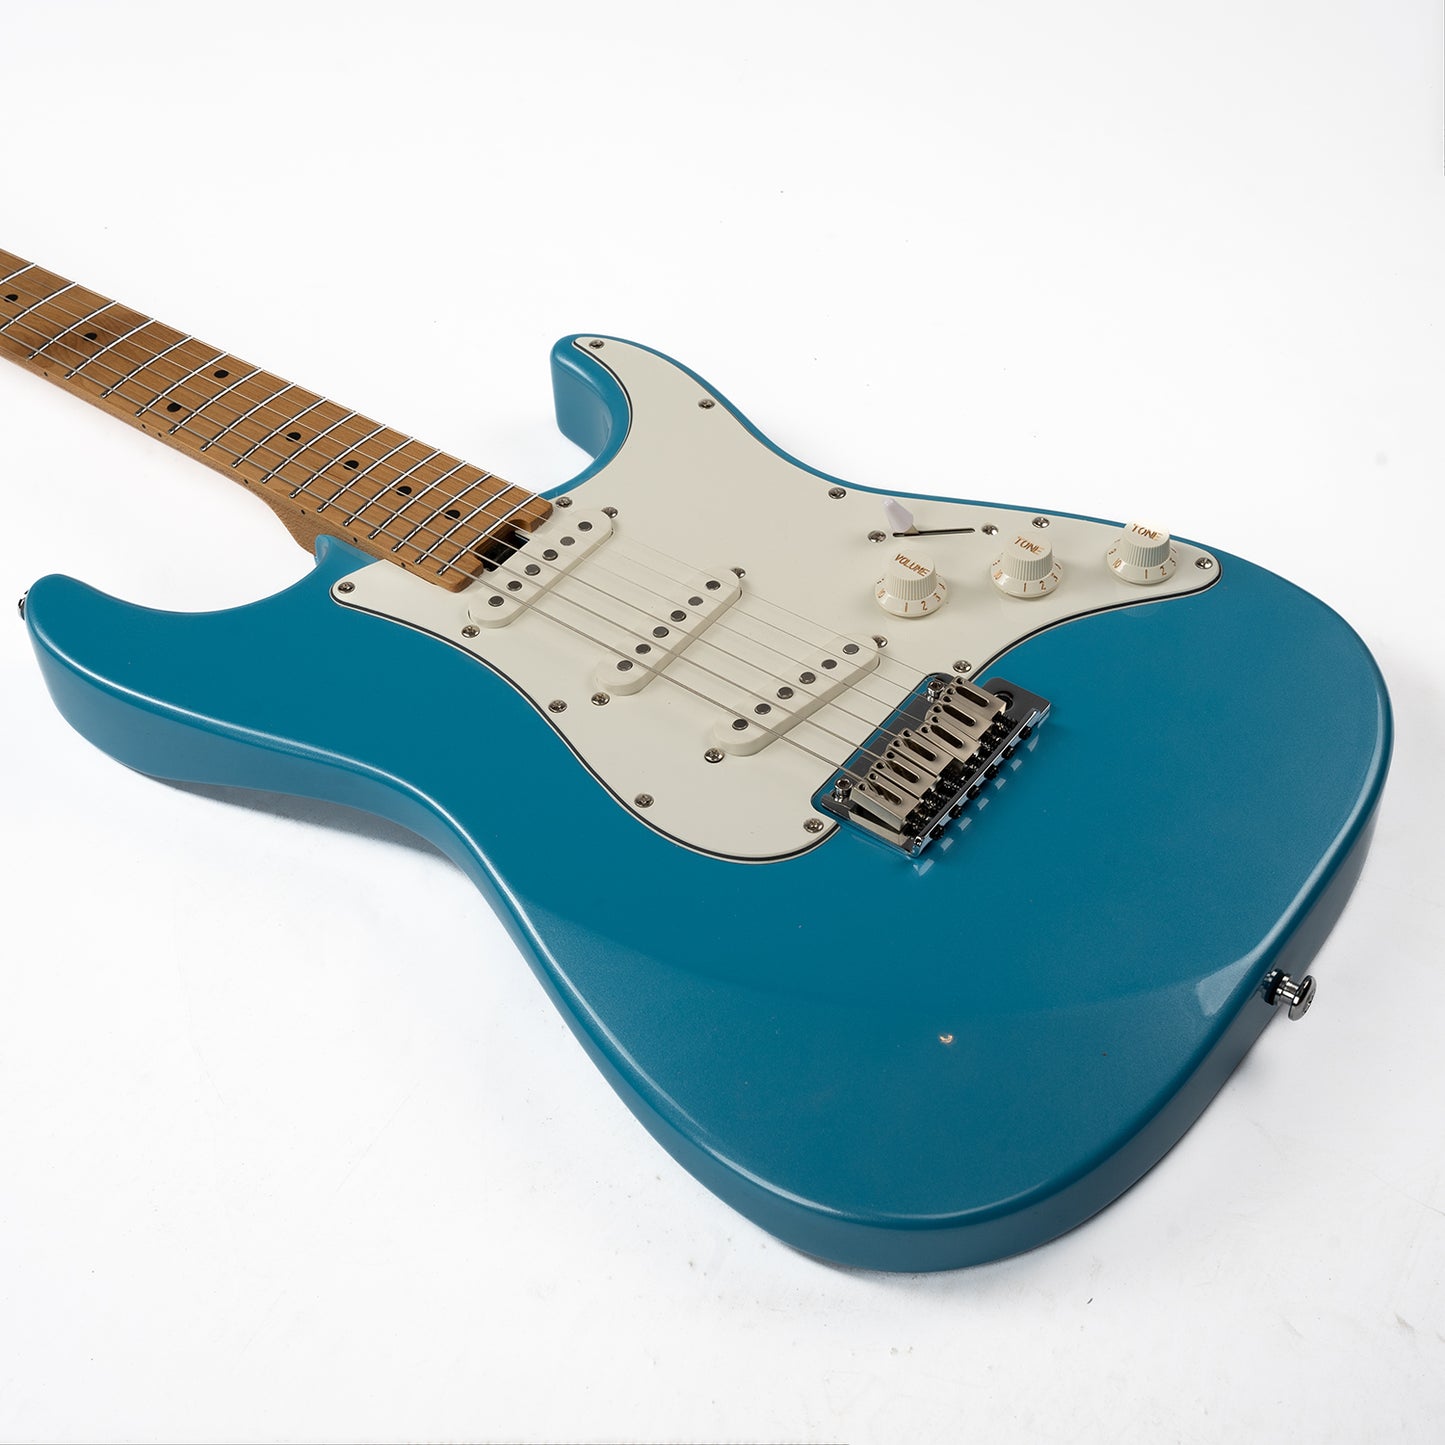 Eart Guitars, NK-VS60, 2-Point Synchronized Tremolo Bridge Alnico V Pickups Classic Electric Guitars, Pearl blue